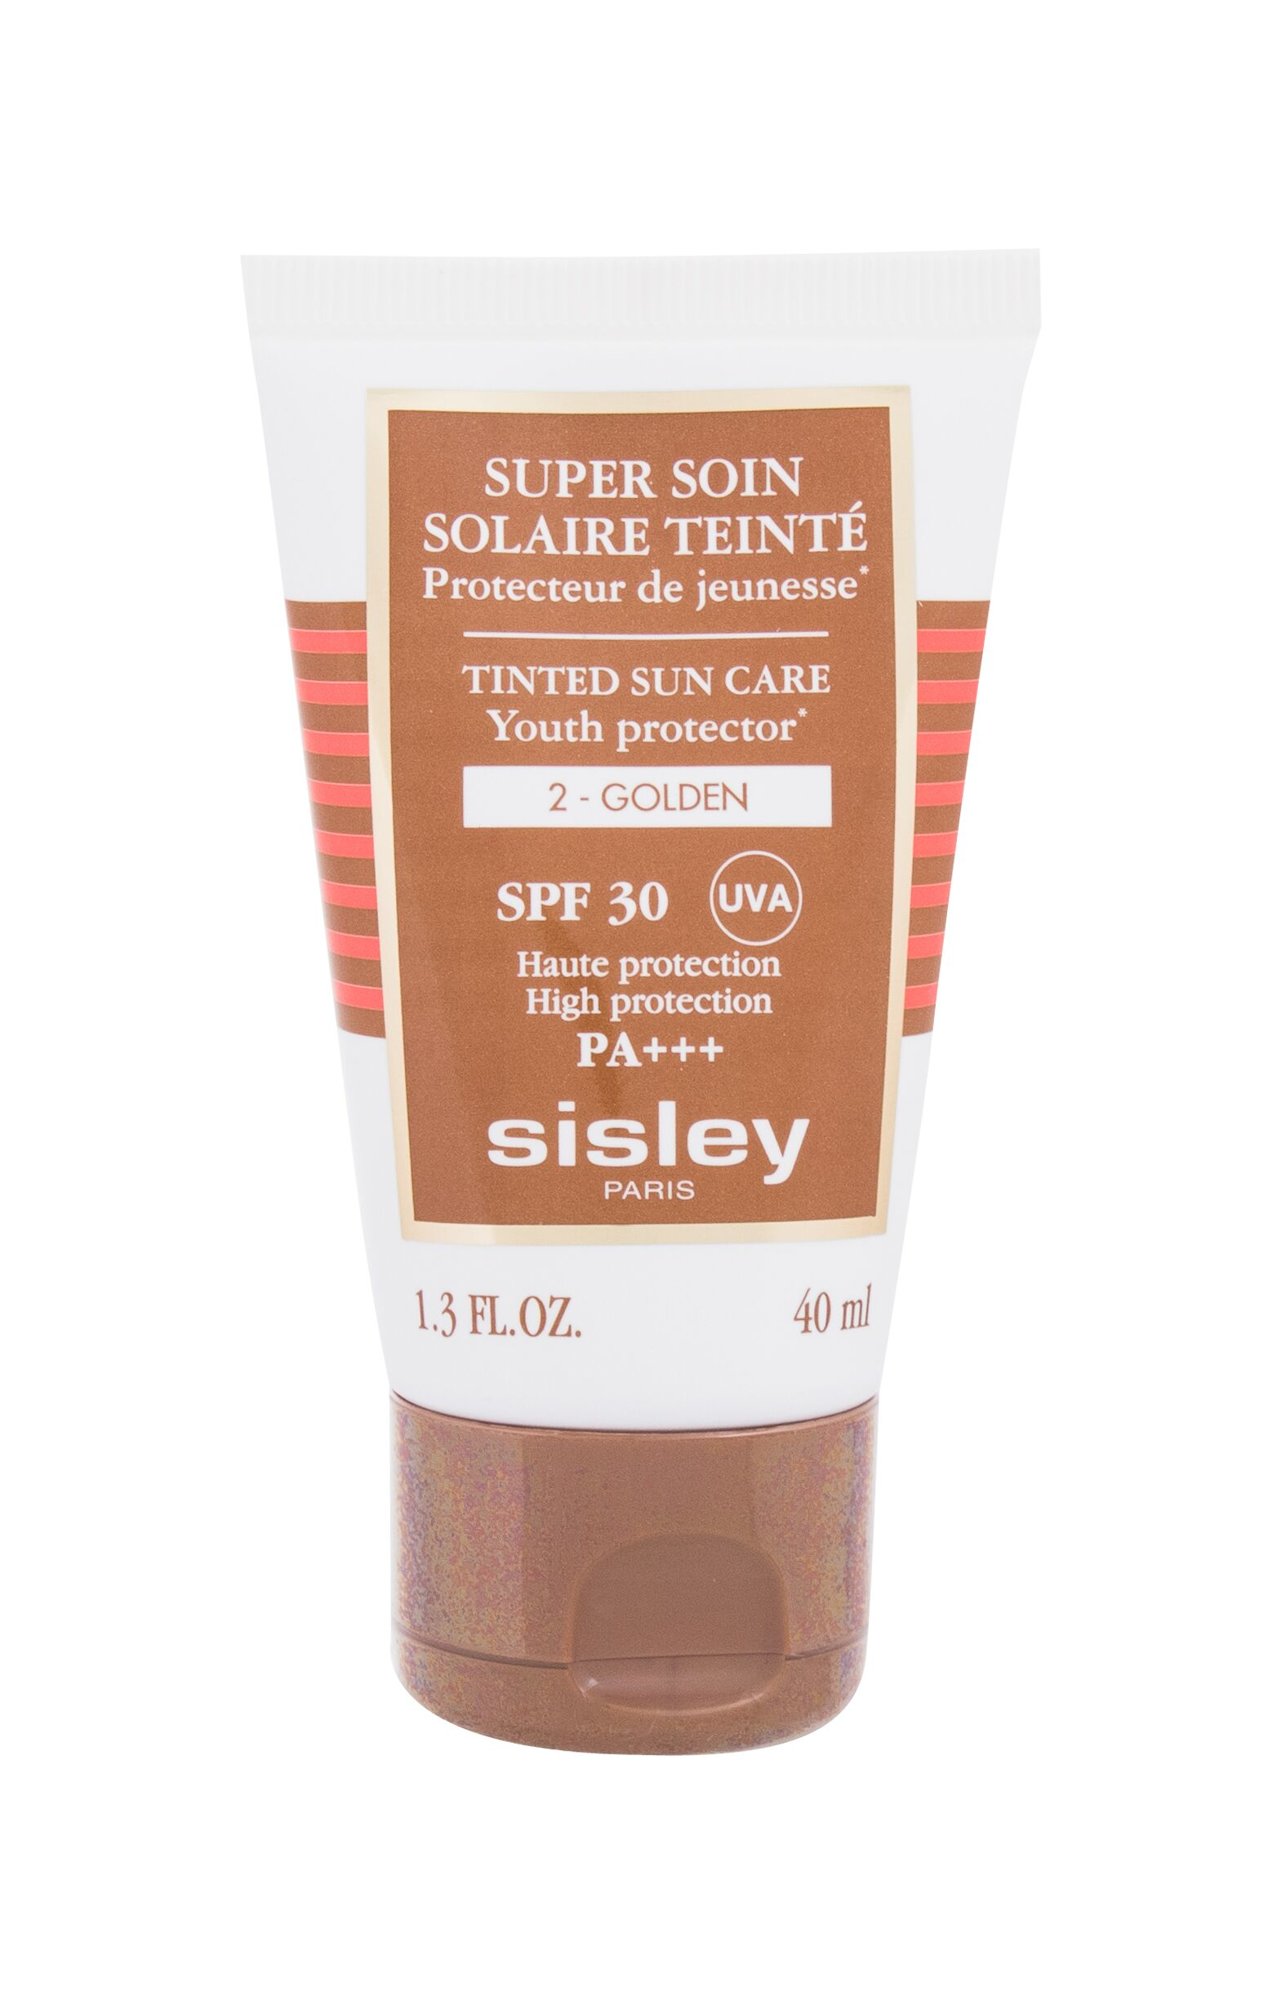 Sisley Super Soin Solaire Teinté Tinted Sun Care 40ml NIŠINIAI veido apsauga